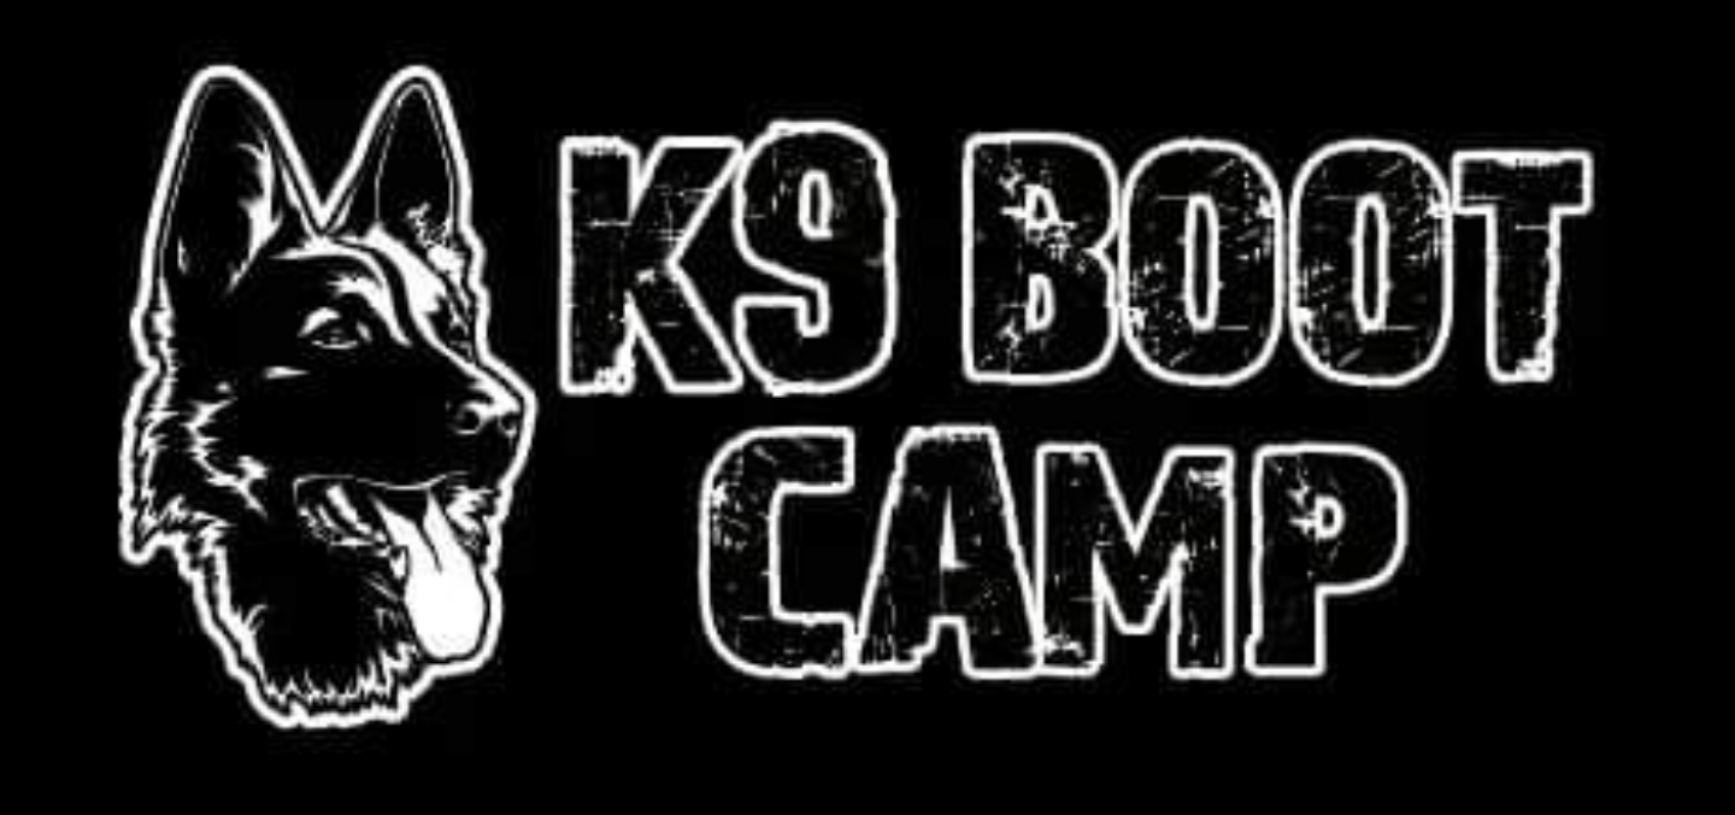 K9 boot camp